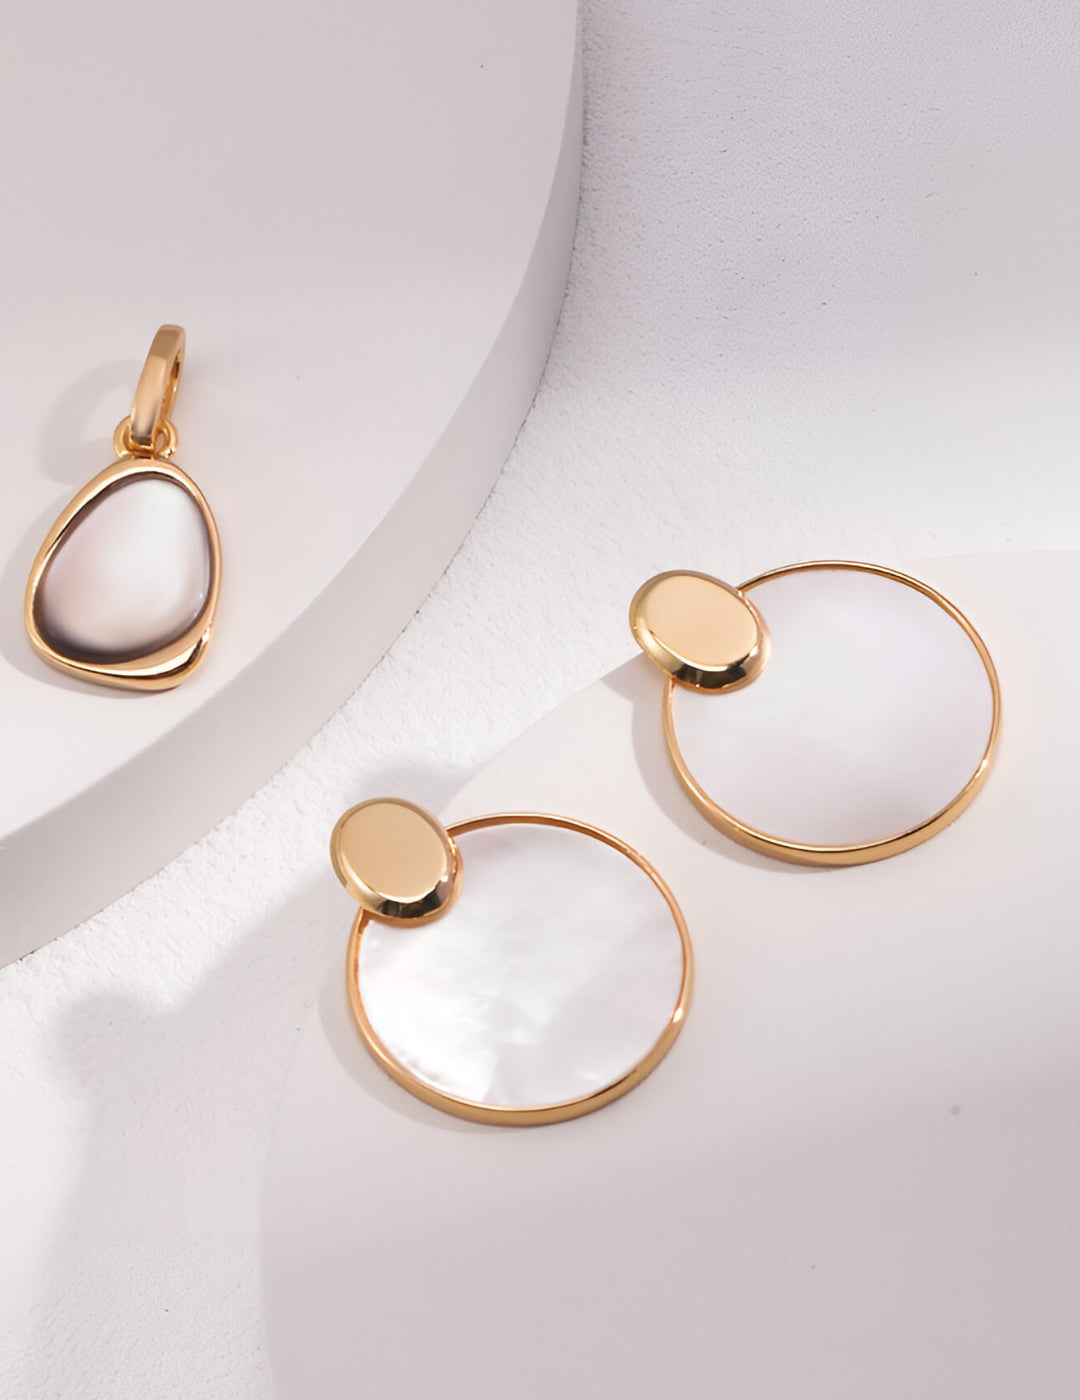 Adaptable Elegance - Stud and Earrings - S925 Sterling Silver with 18K Gold Vermeil Earrings - simple and elegant design